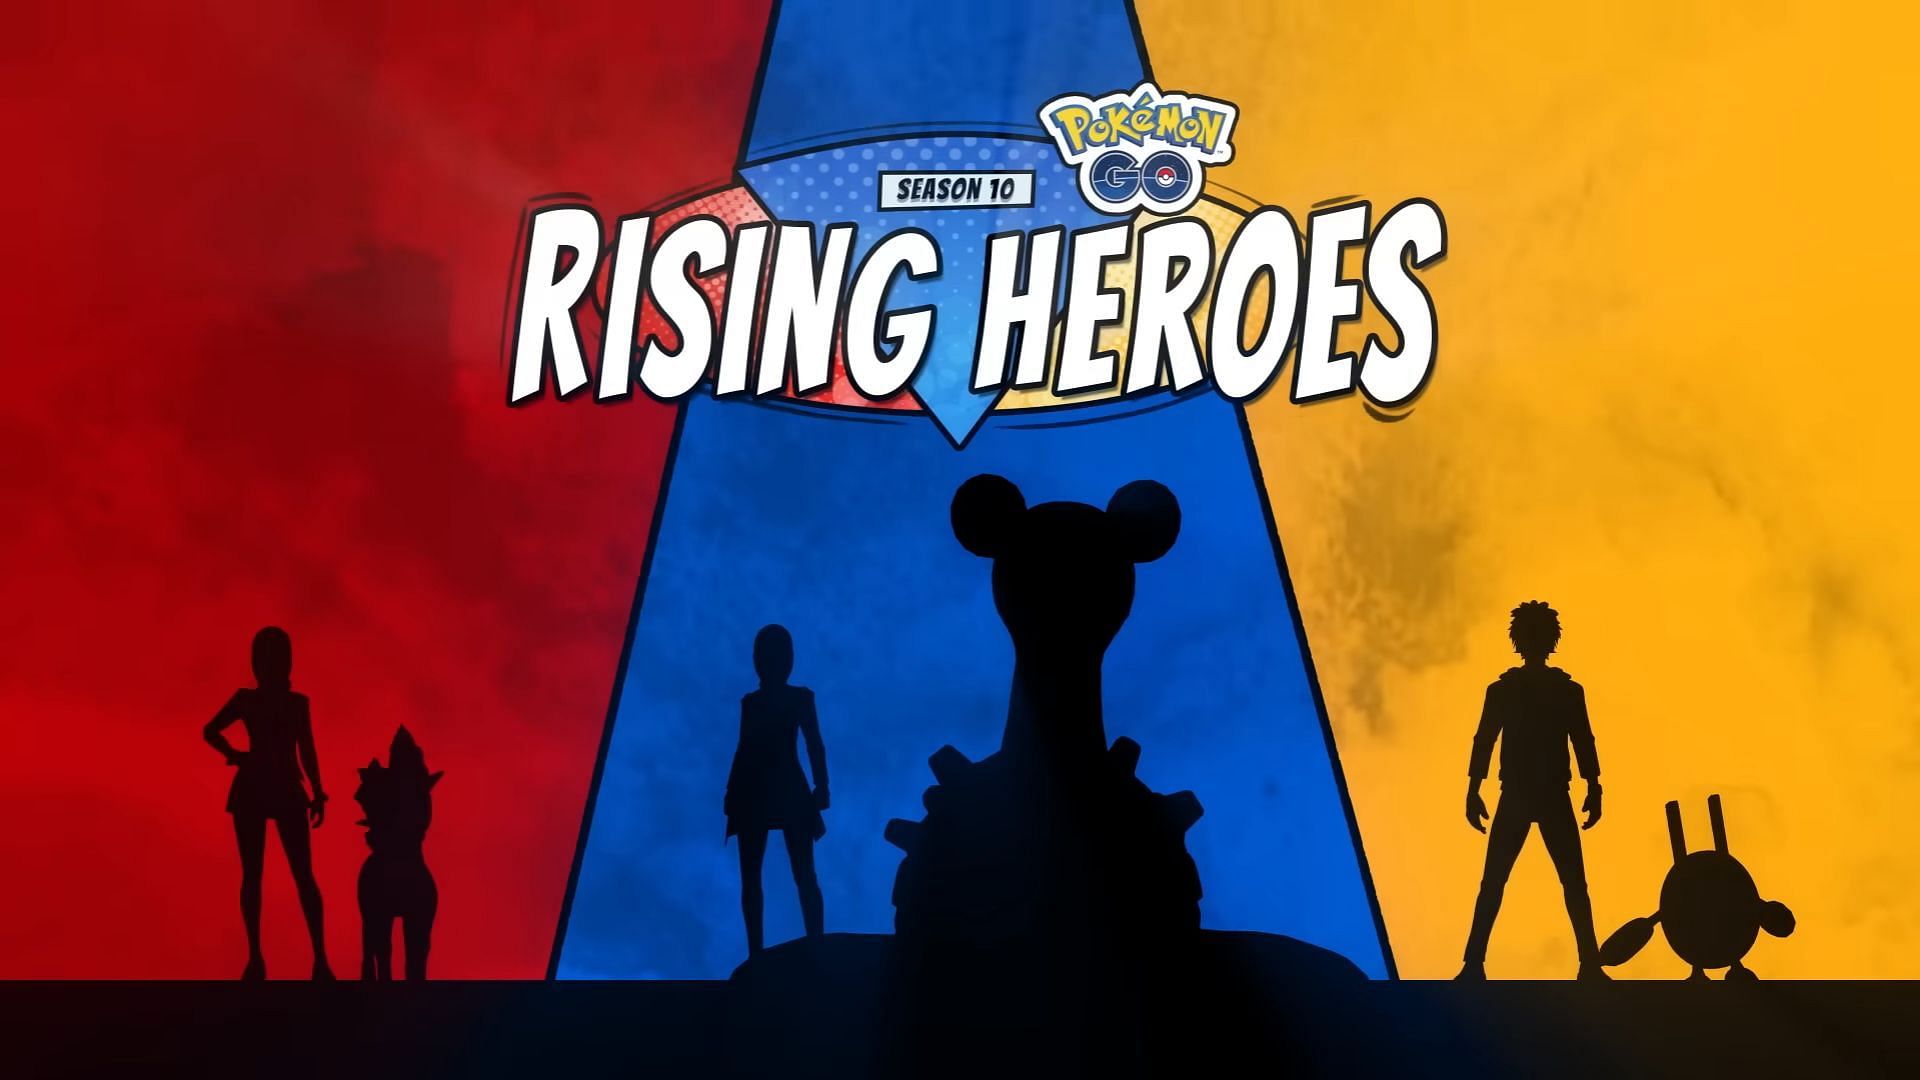 Season 10 Rising Heroes is coming (Image via Pokemon GO)